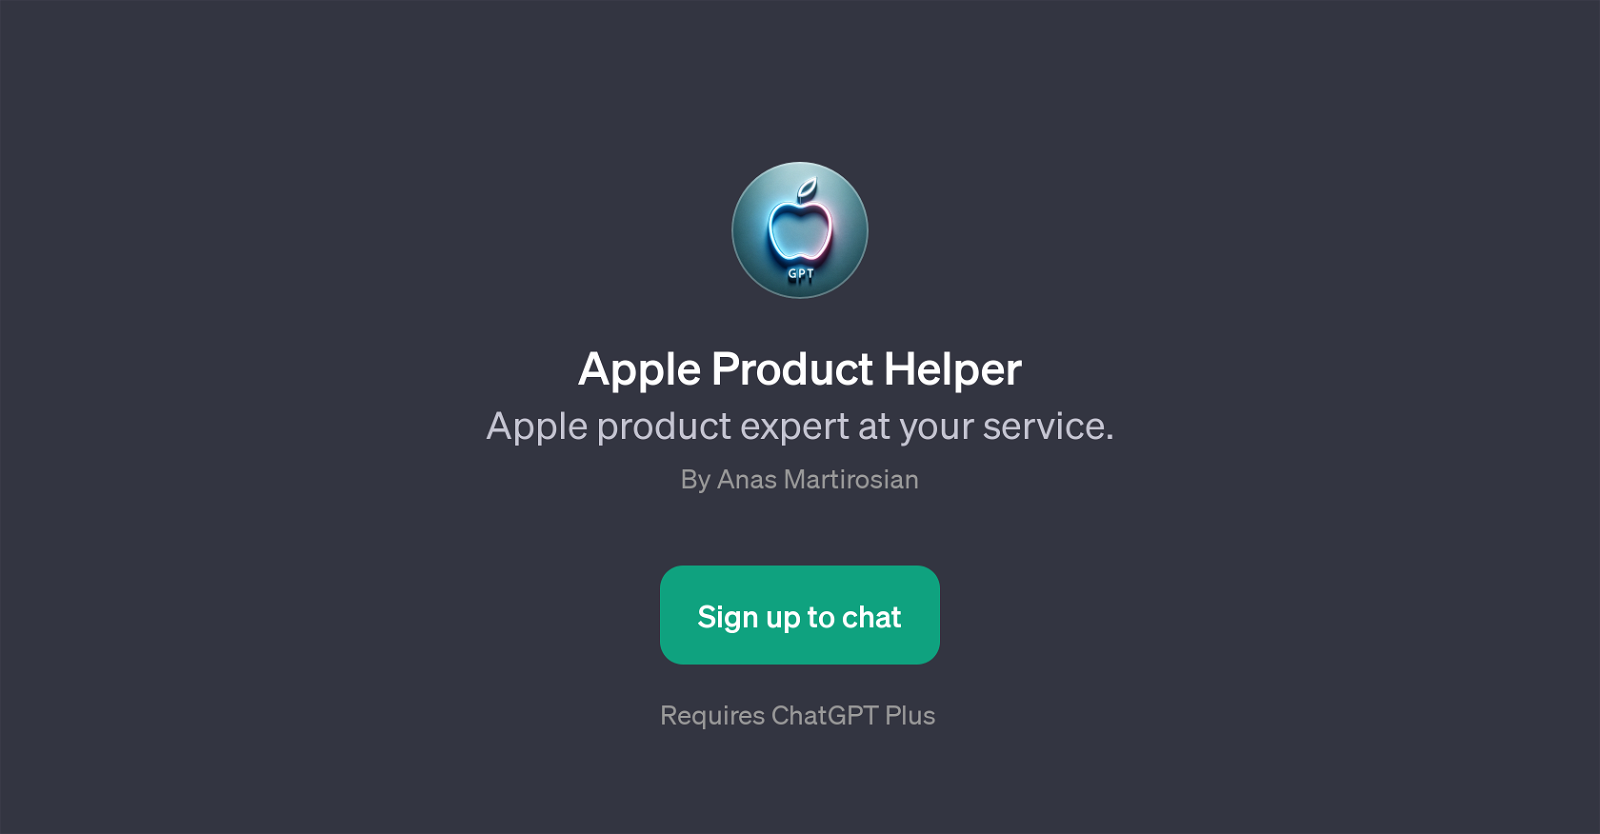 Apple Product Helper website